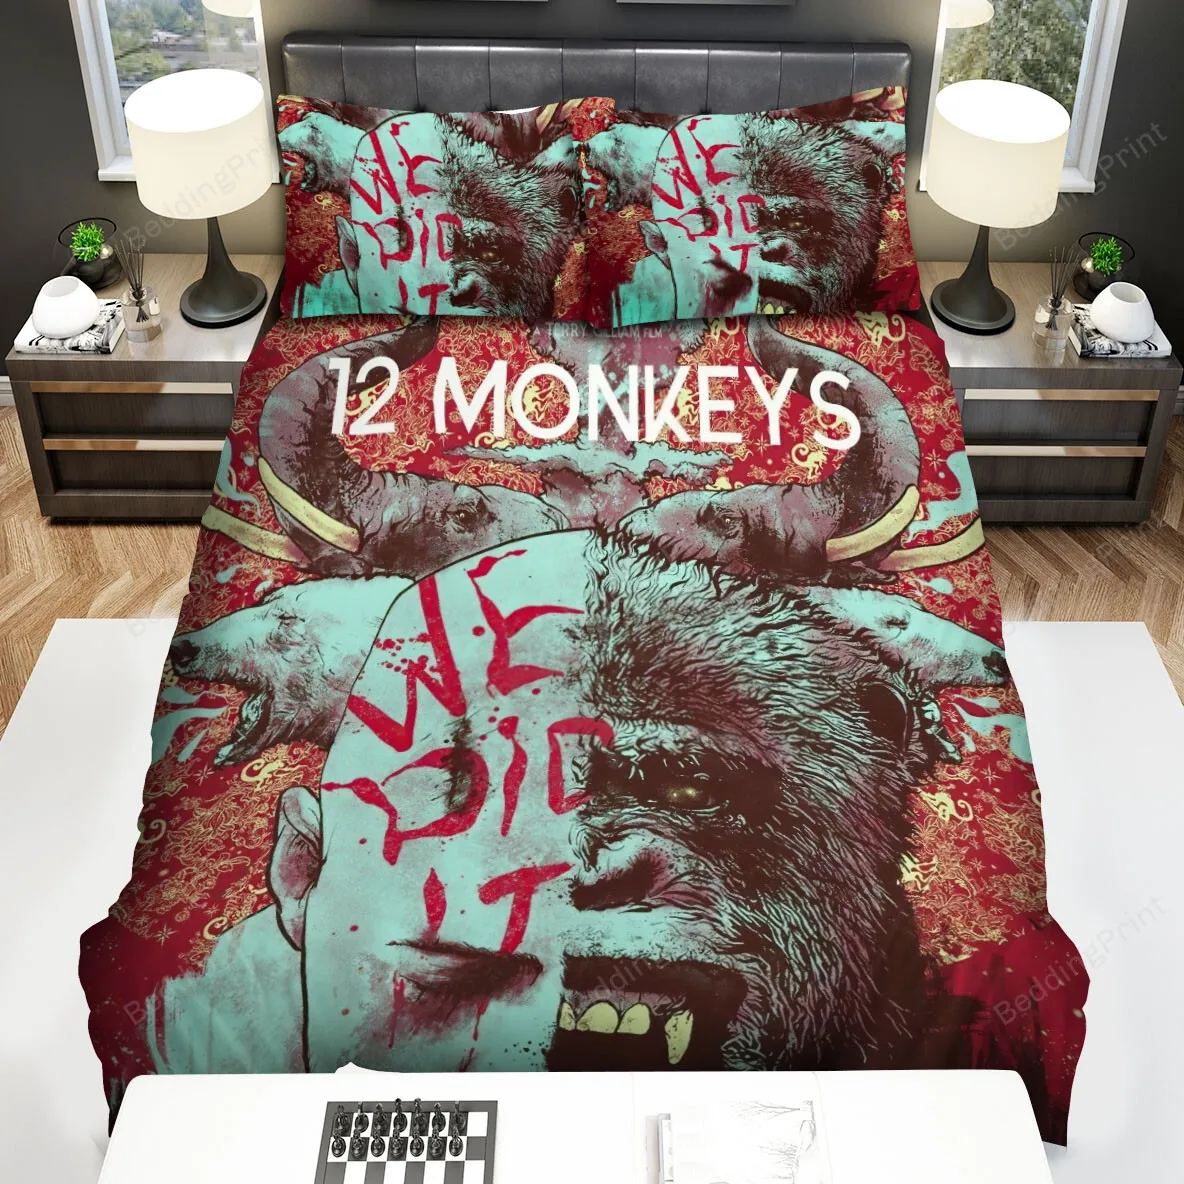 12 Monkeys (20152018) We Did It Movie Poster Bed Sheets Spread Comforter Duvet Cover Bedding Sets